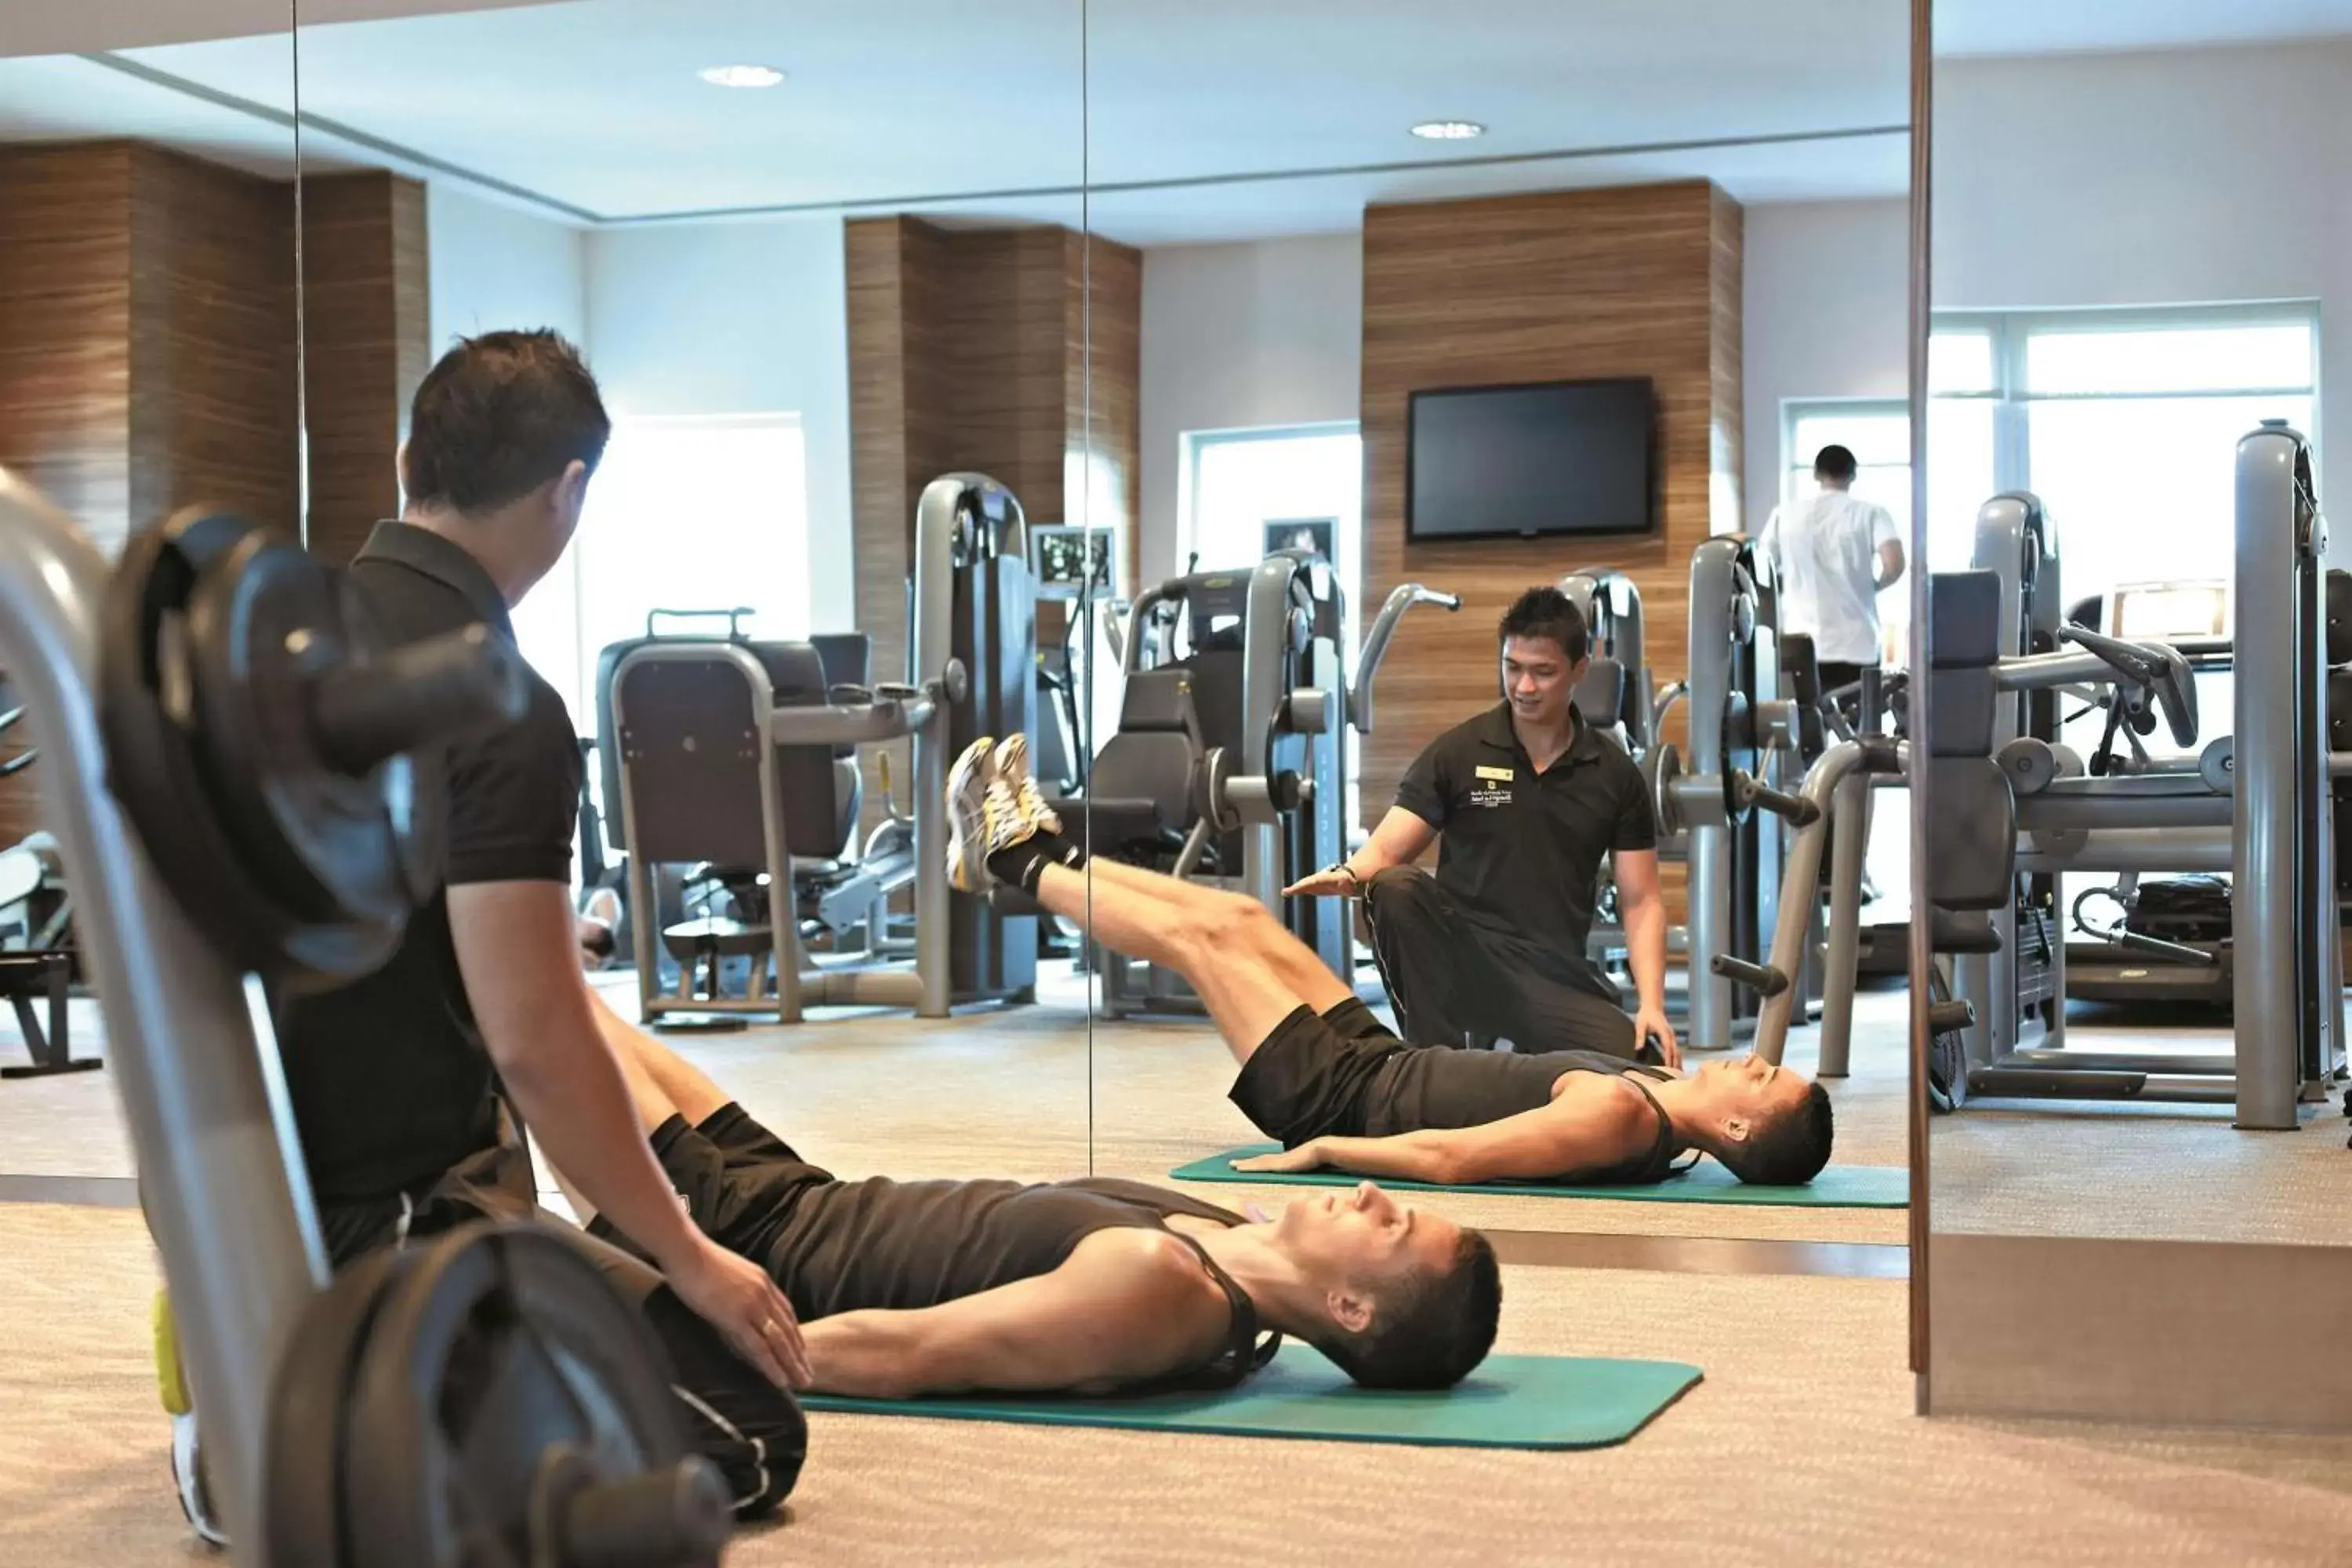 Fitness centre/facilities, Fitness Center/Facilities in Shangri-La Dubai